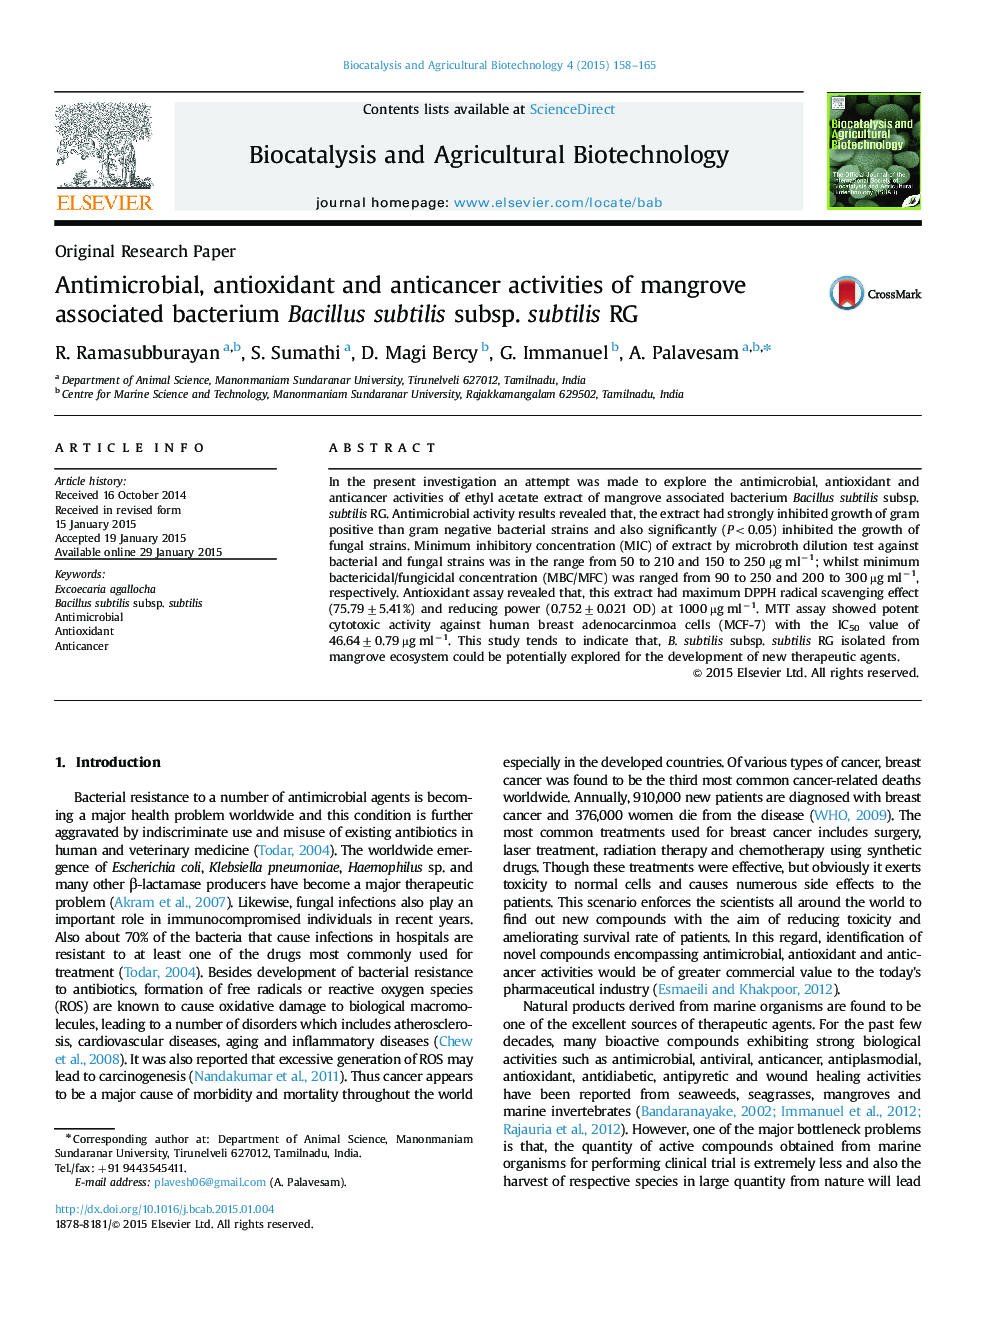 Antimicrobial, antioxidant and anticancer activities of mangrove associated bacterium Bacillus subtilis subsp. subtilis RG